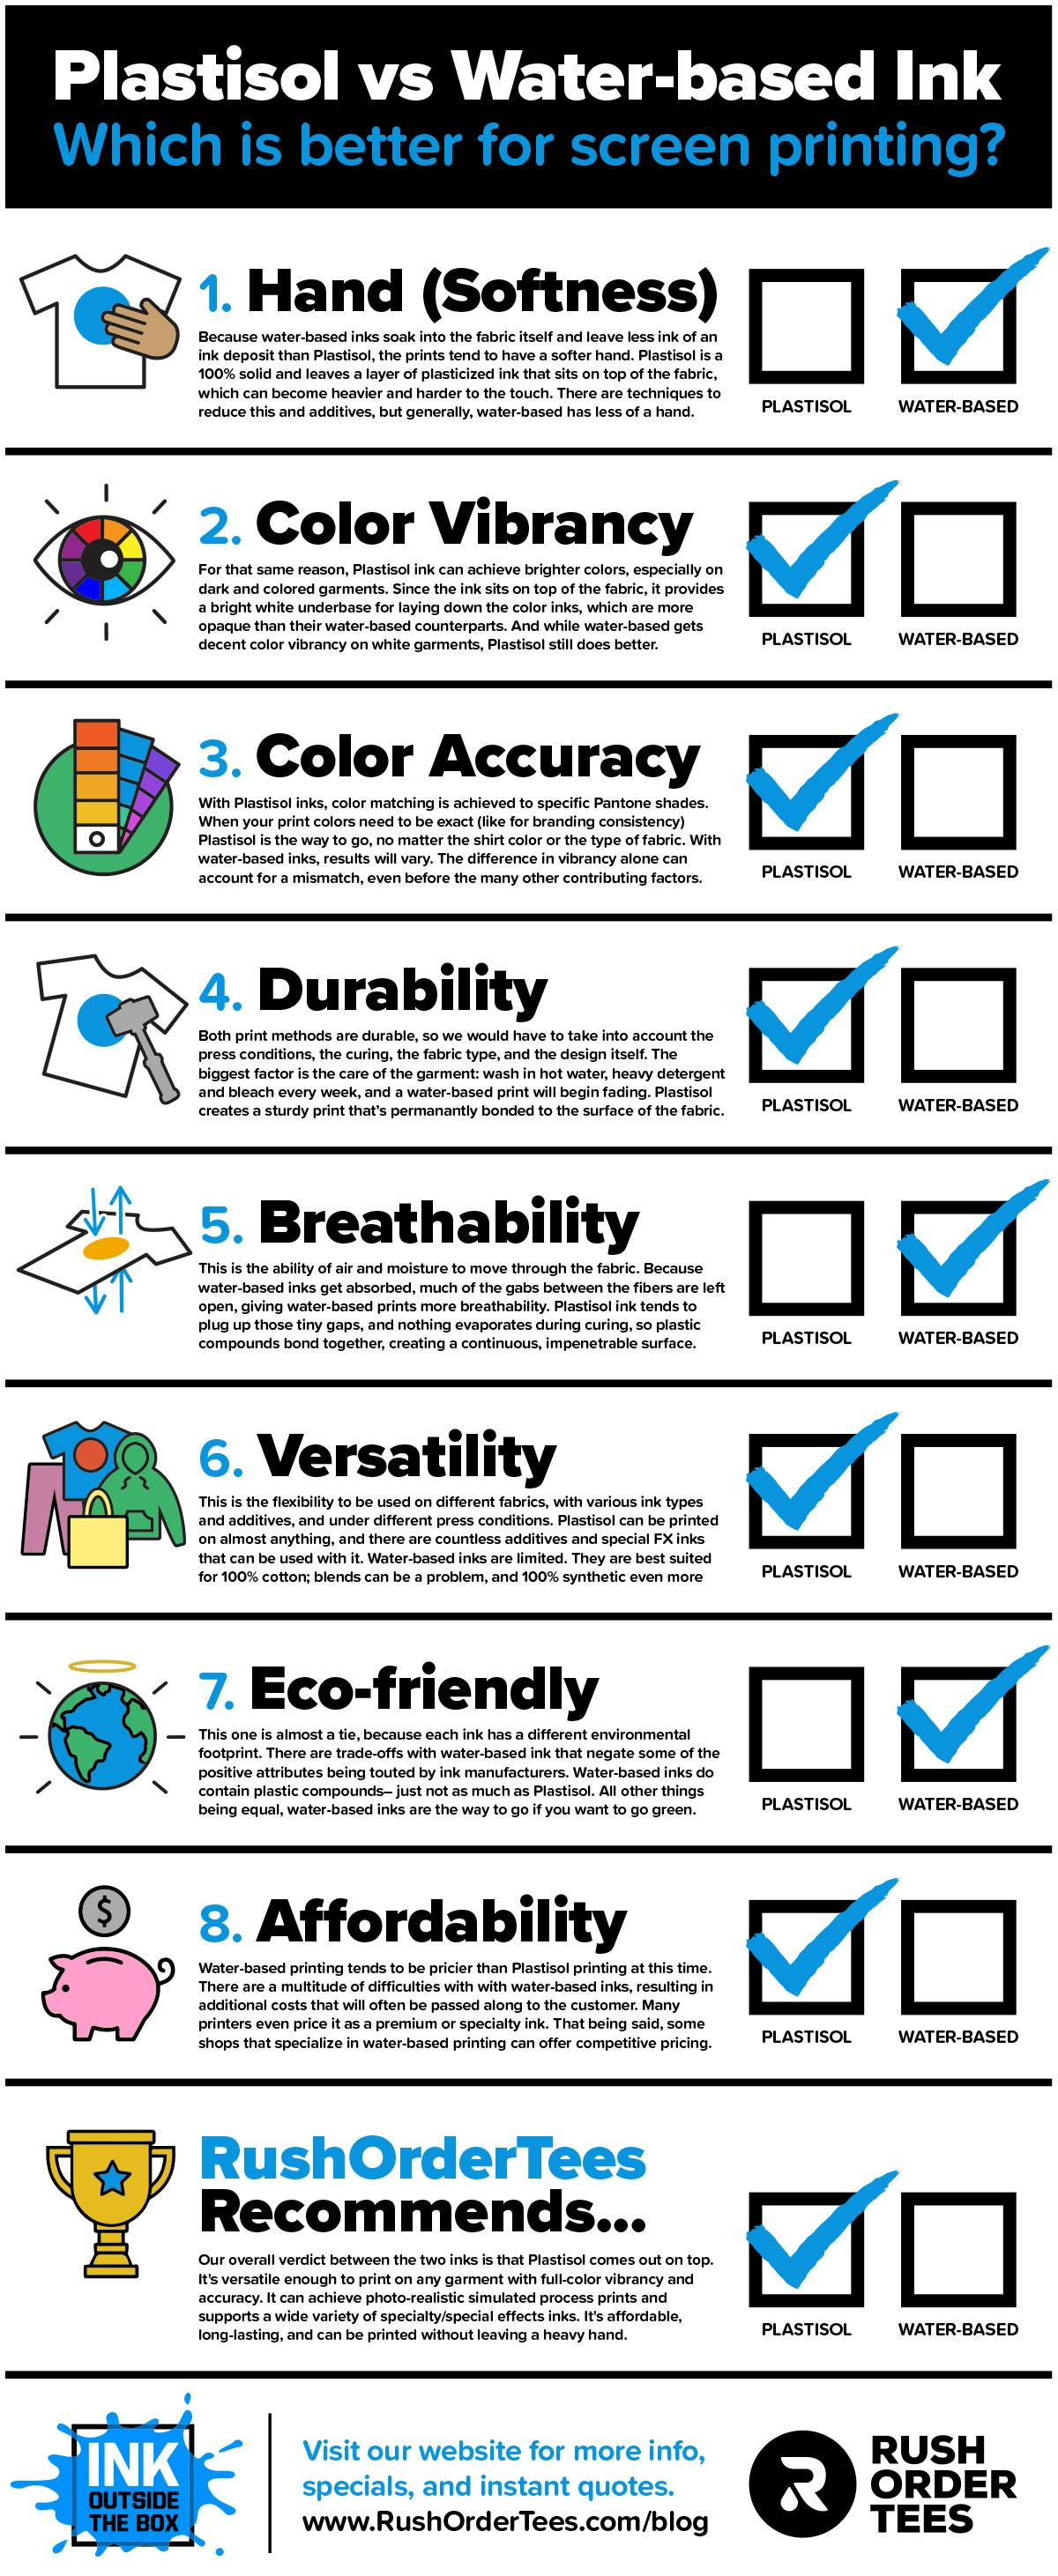 3 Ways to Ensure Color Consistency in Printed Materials